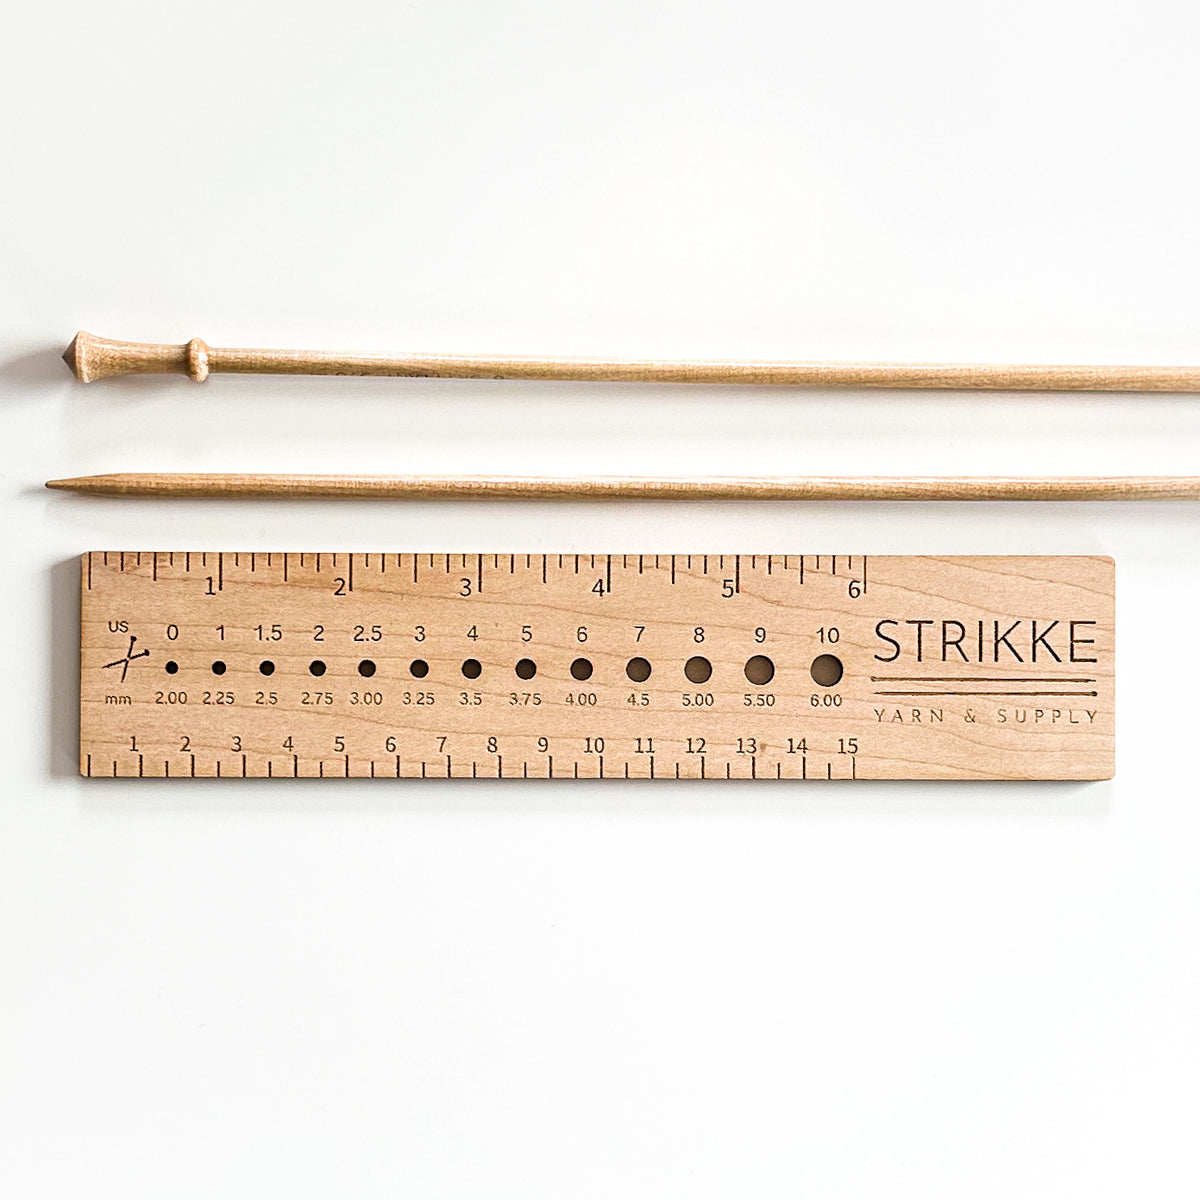 Strikke Yarn & Supply - Wood Ruler & Needle Gauge